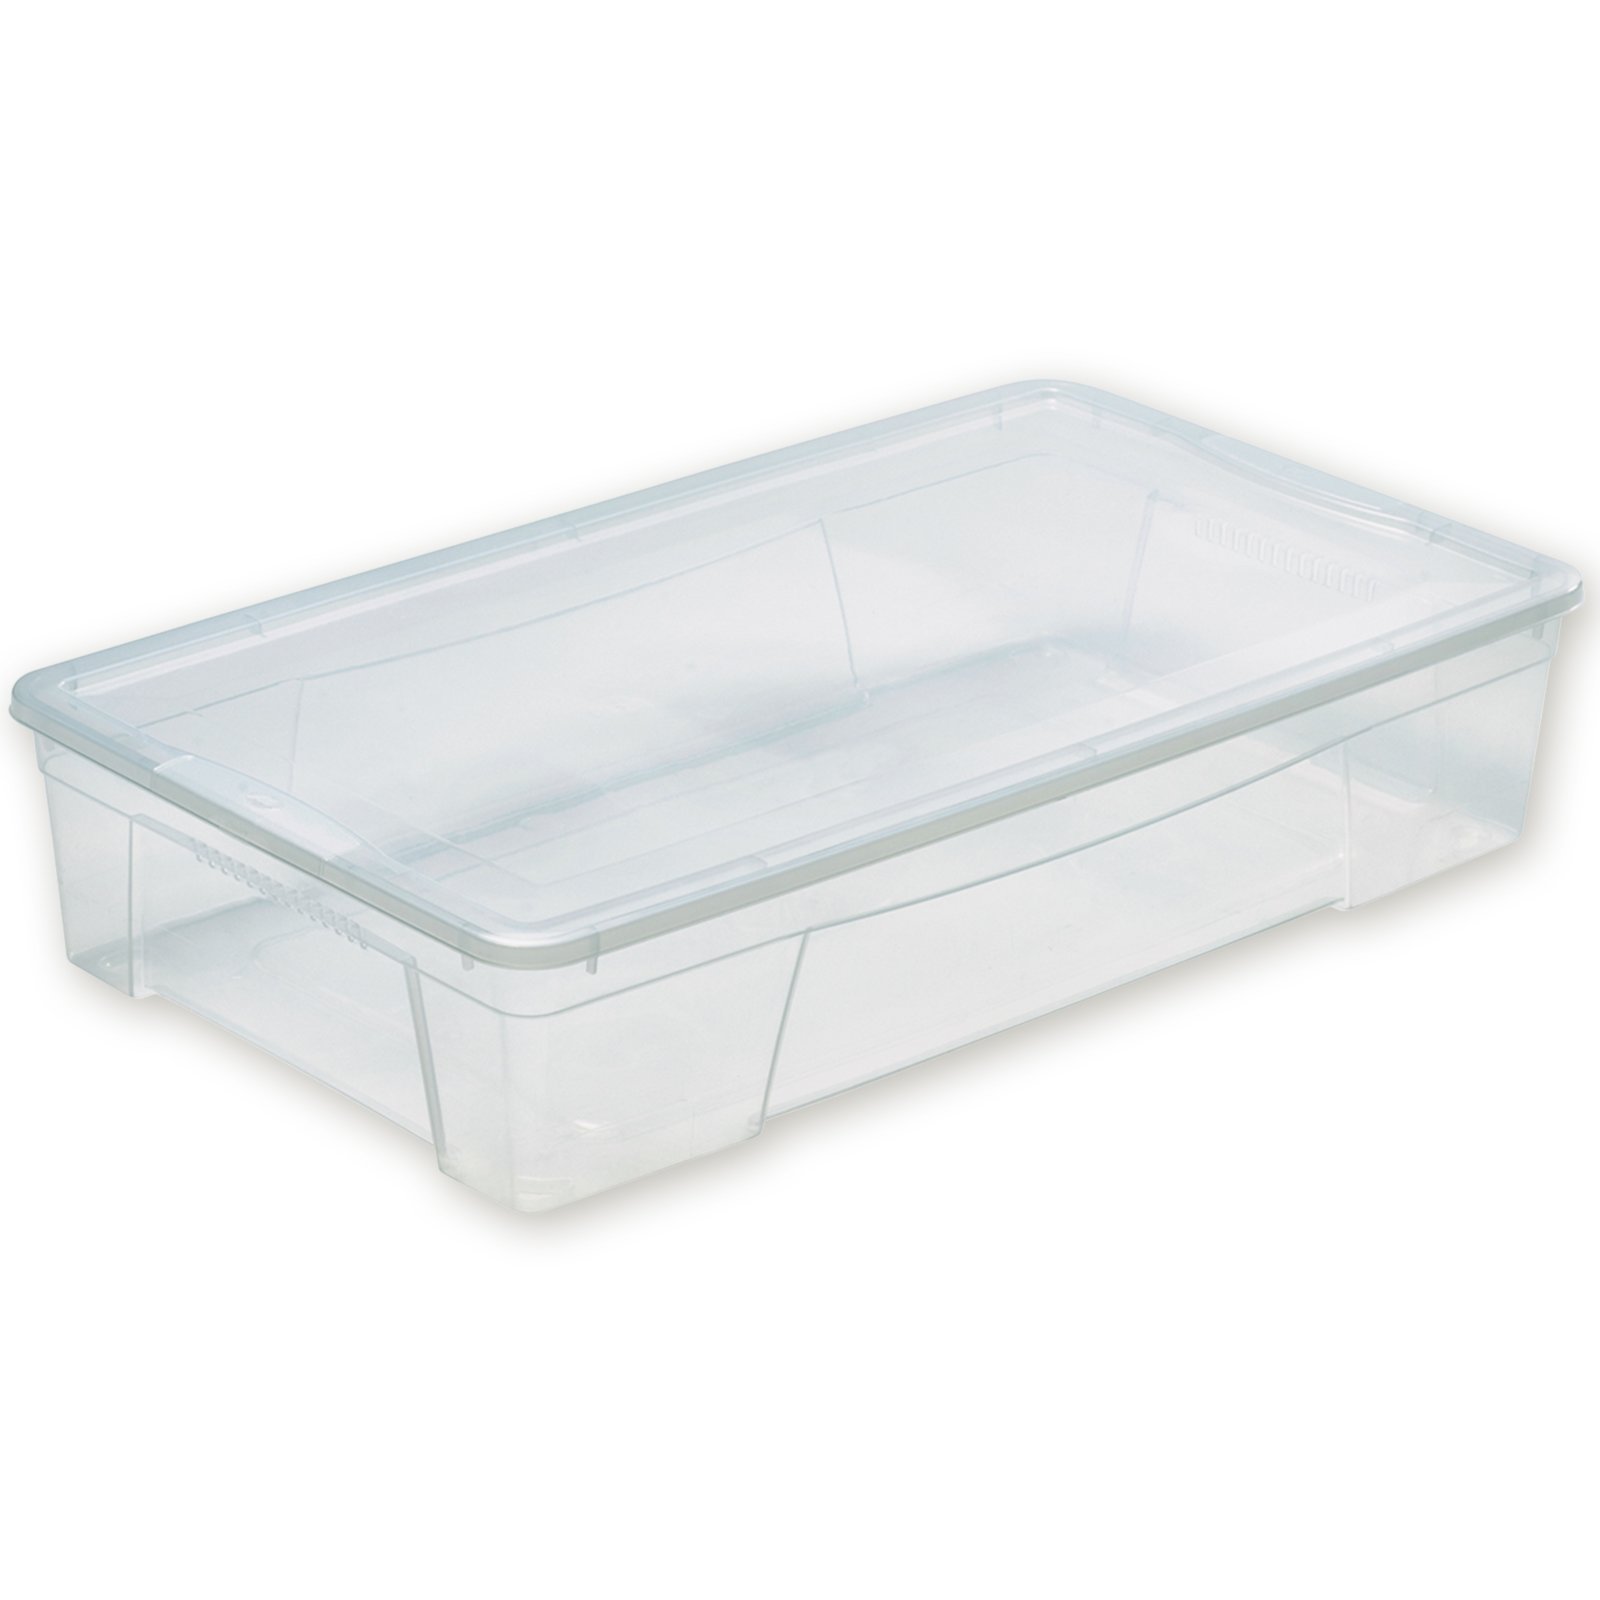 OKT Deckel für Aufbewahrungsbox Multi-Box XXL, transparent Material: PP,  Maße: B520 x T430 mm 1024900100000